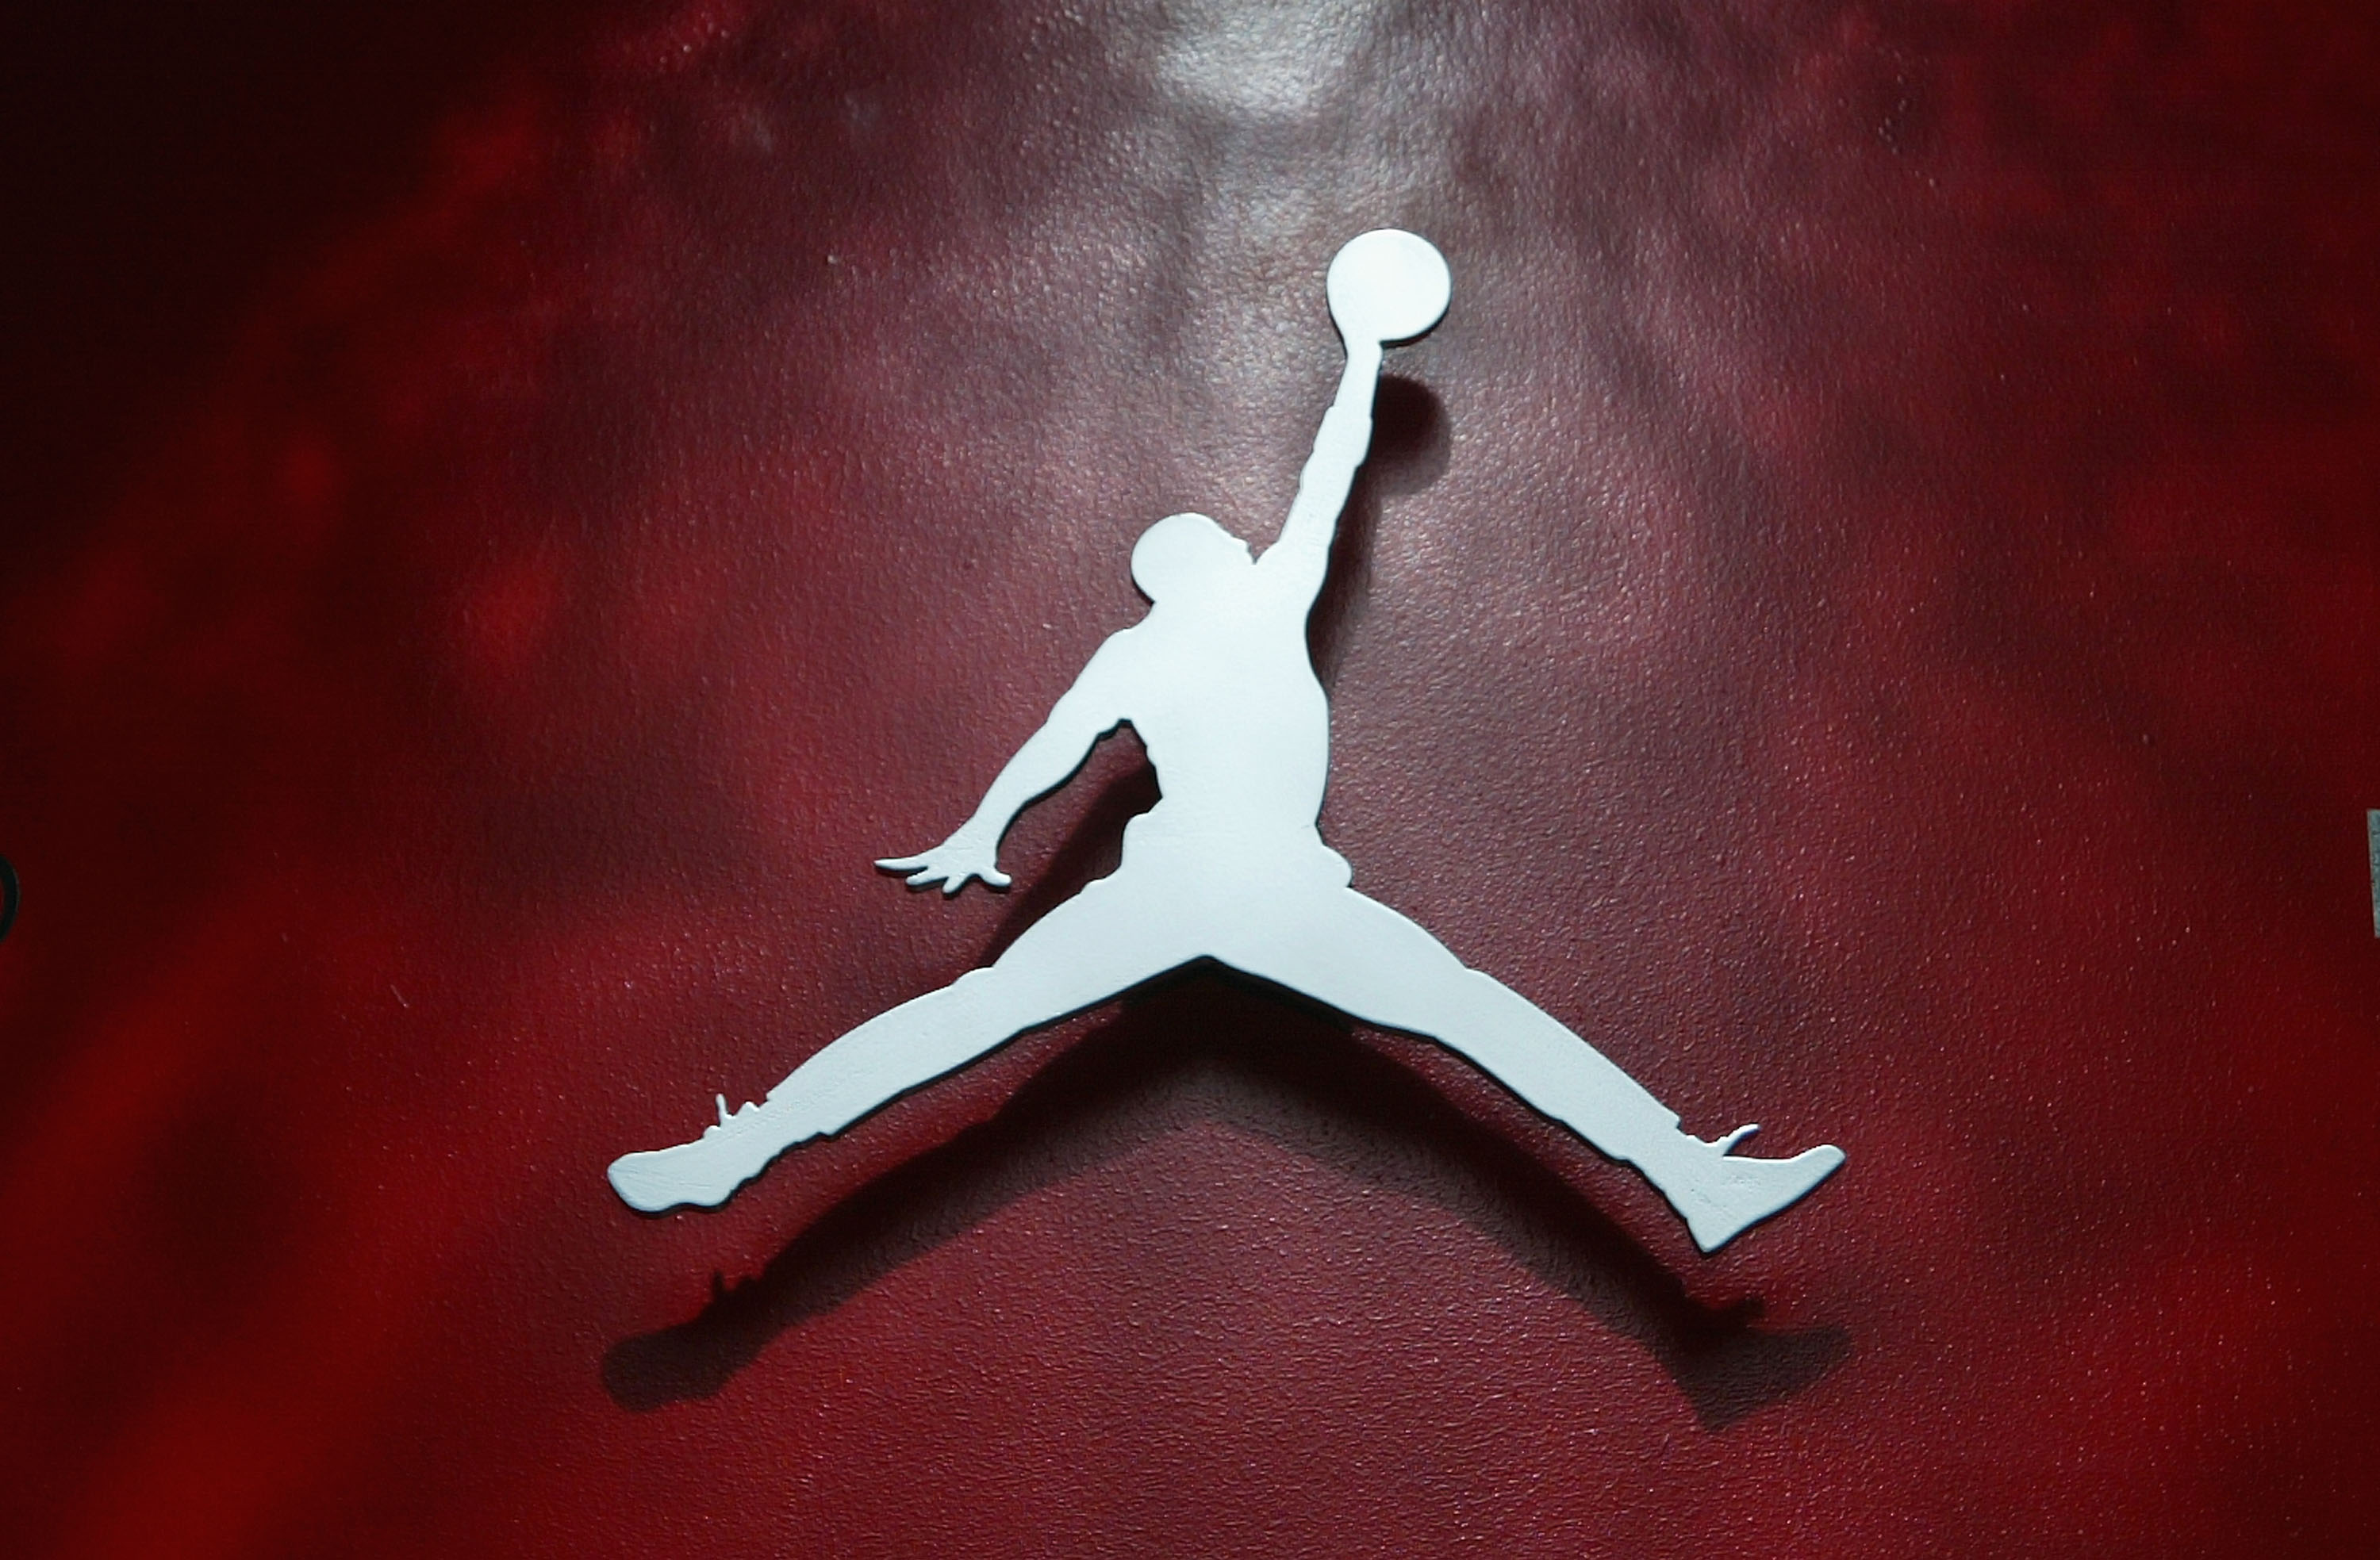 Air Jordan 12 “Cherry” Drops This Fall: First Look